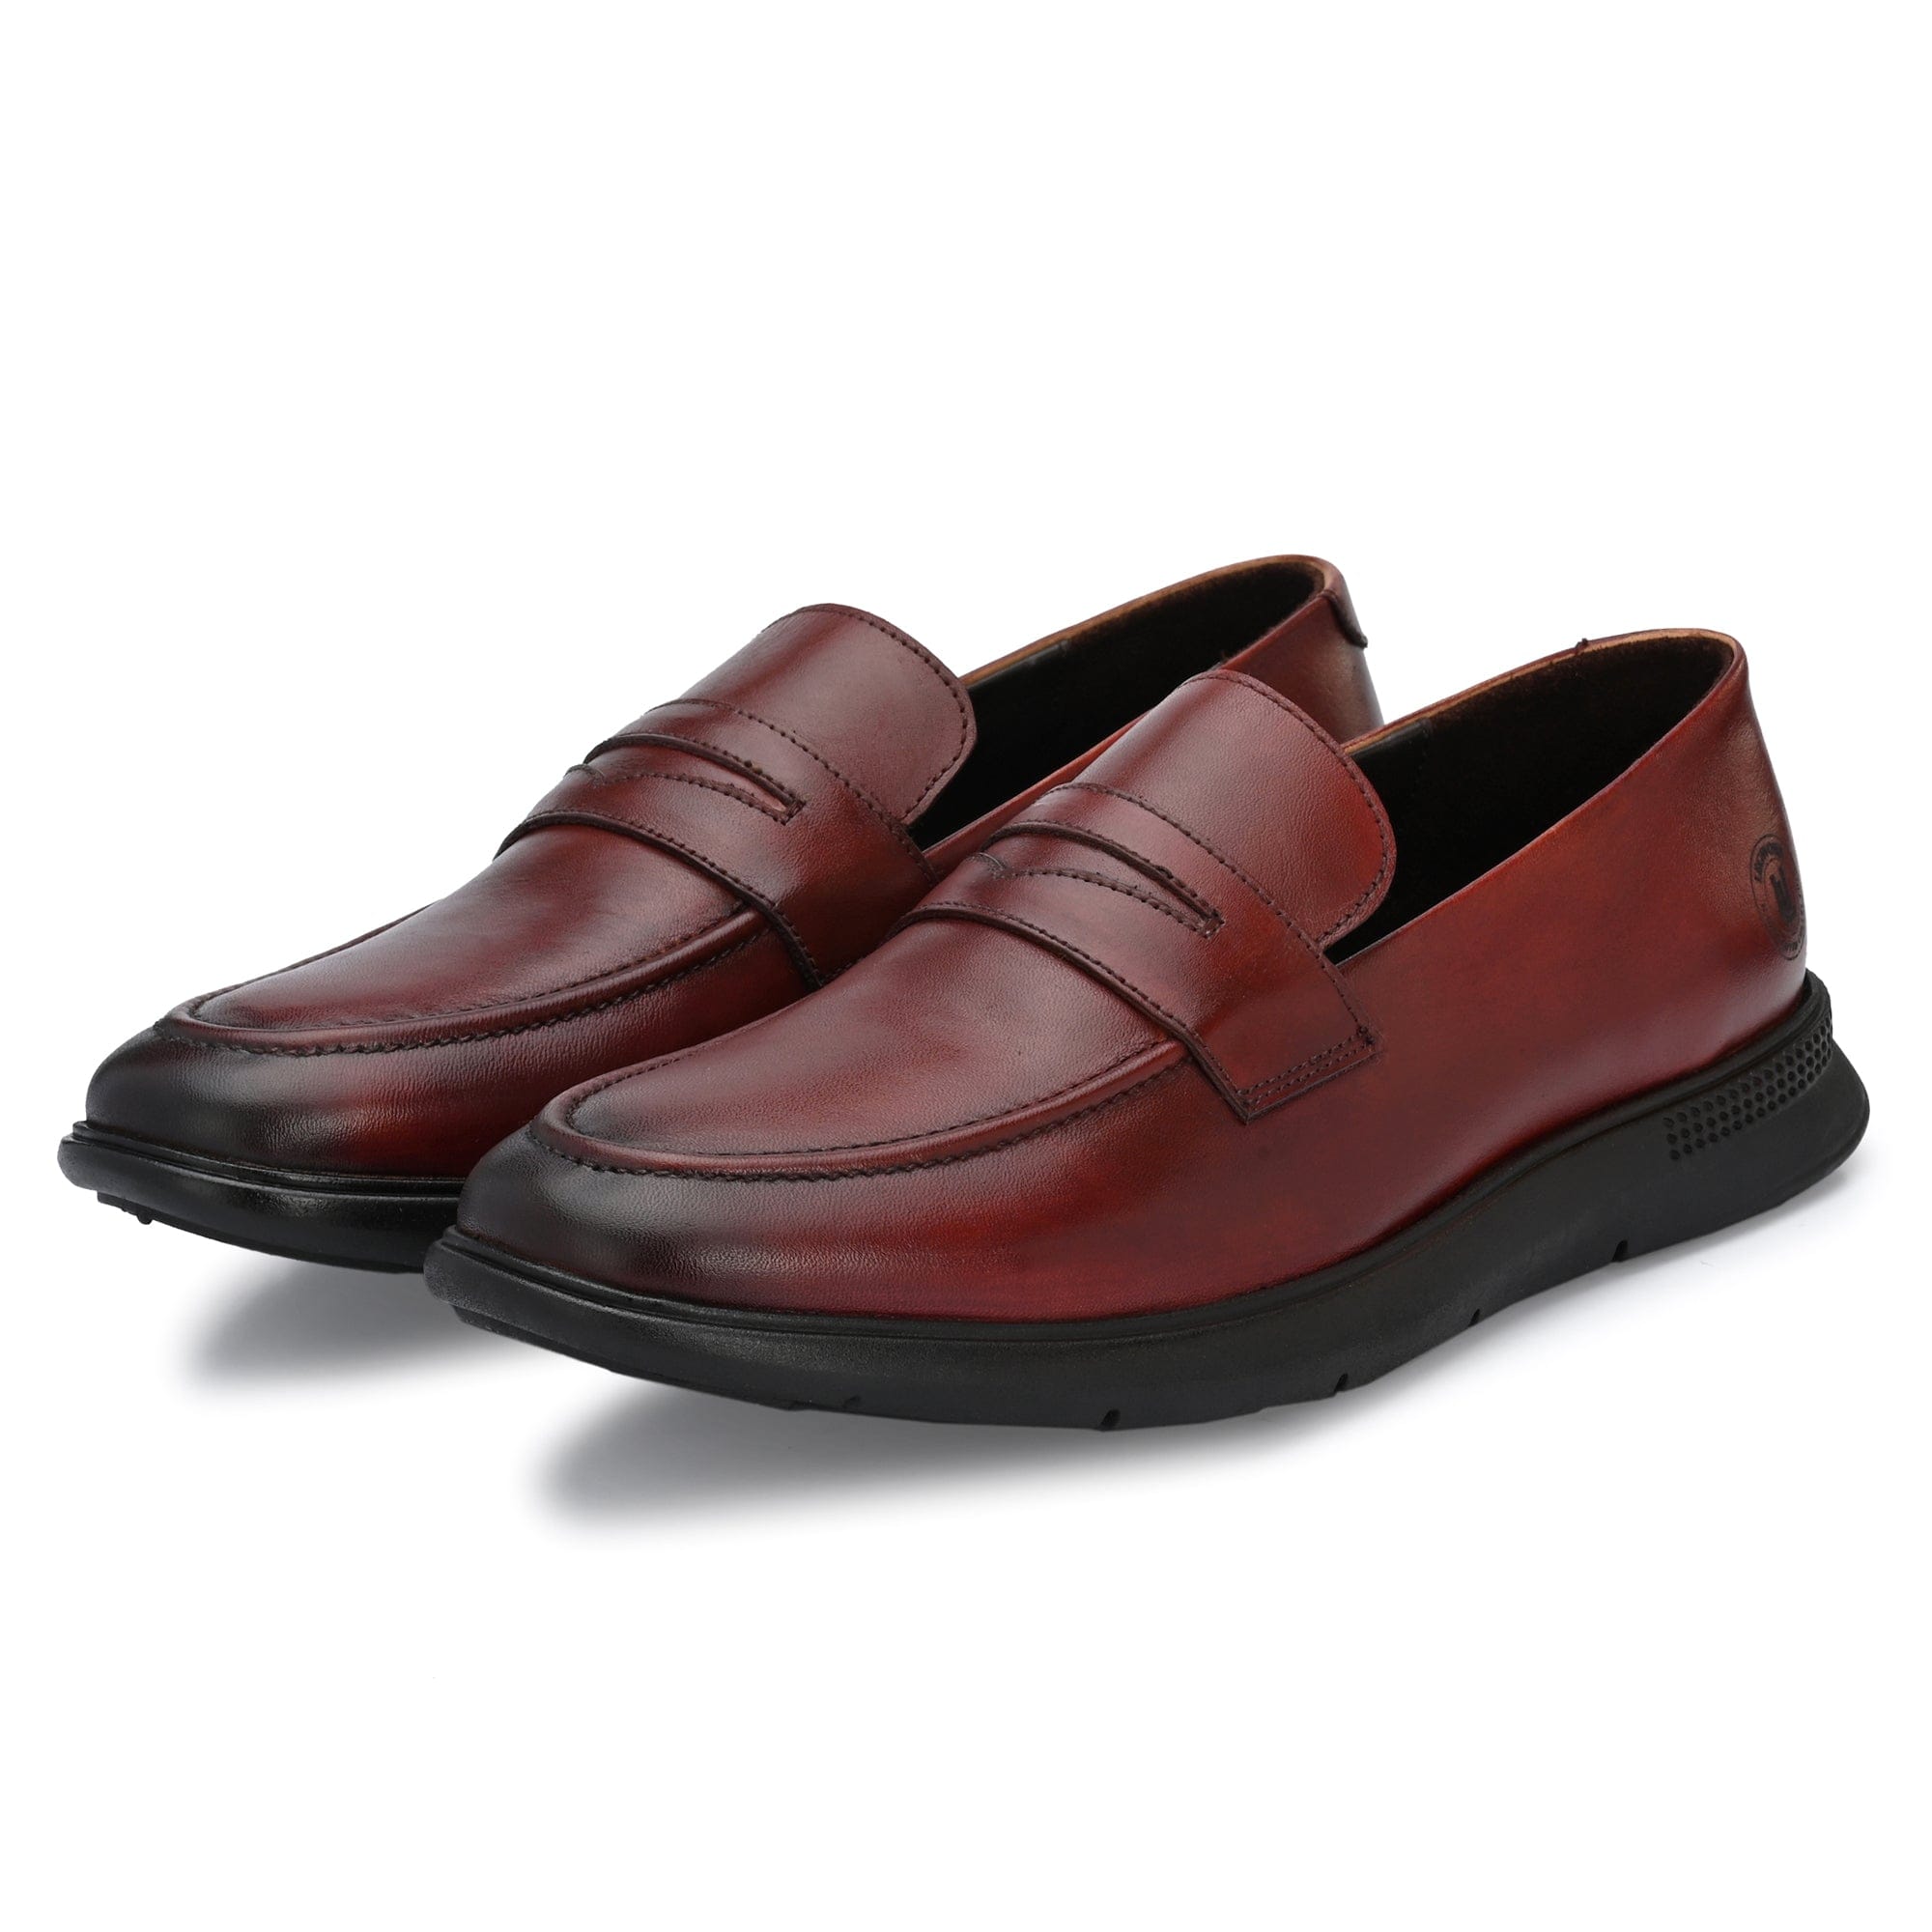 Legwork Loafer 2.0 Cognac Italian Leather Shoes